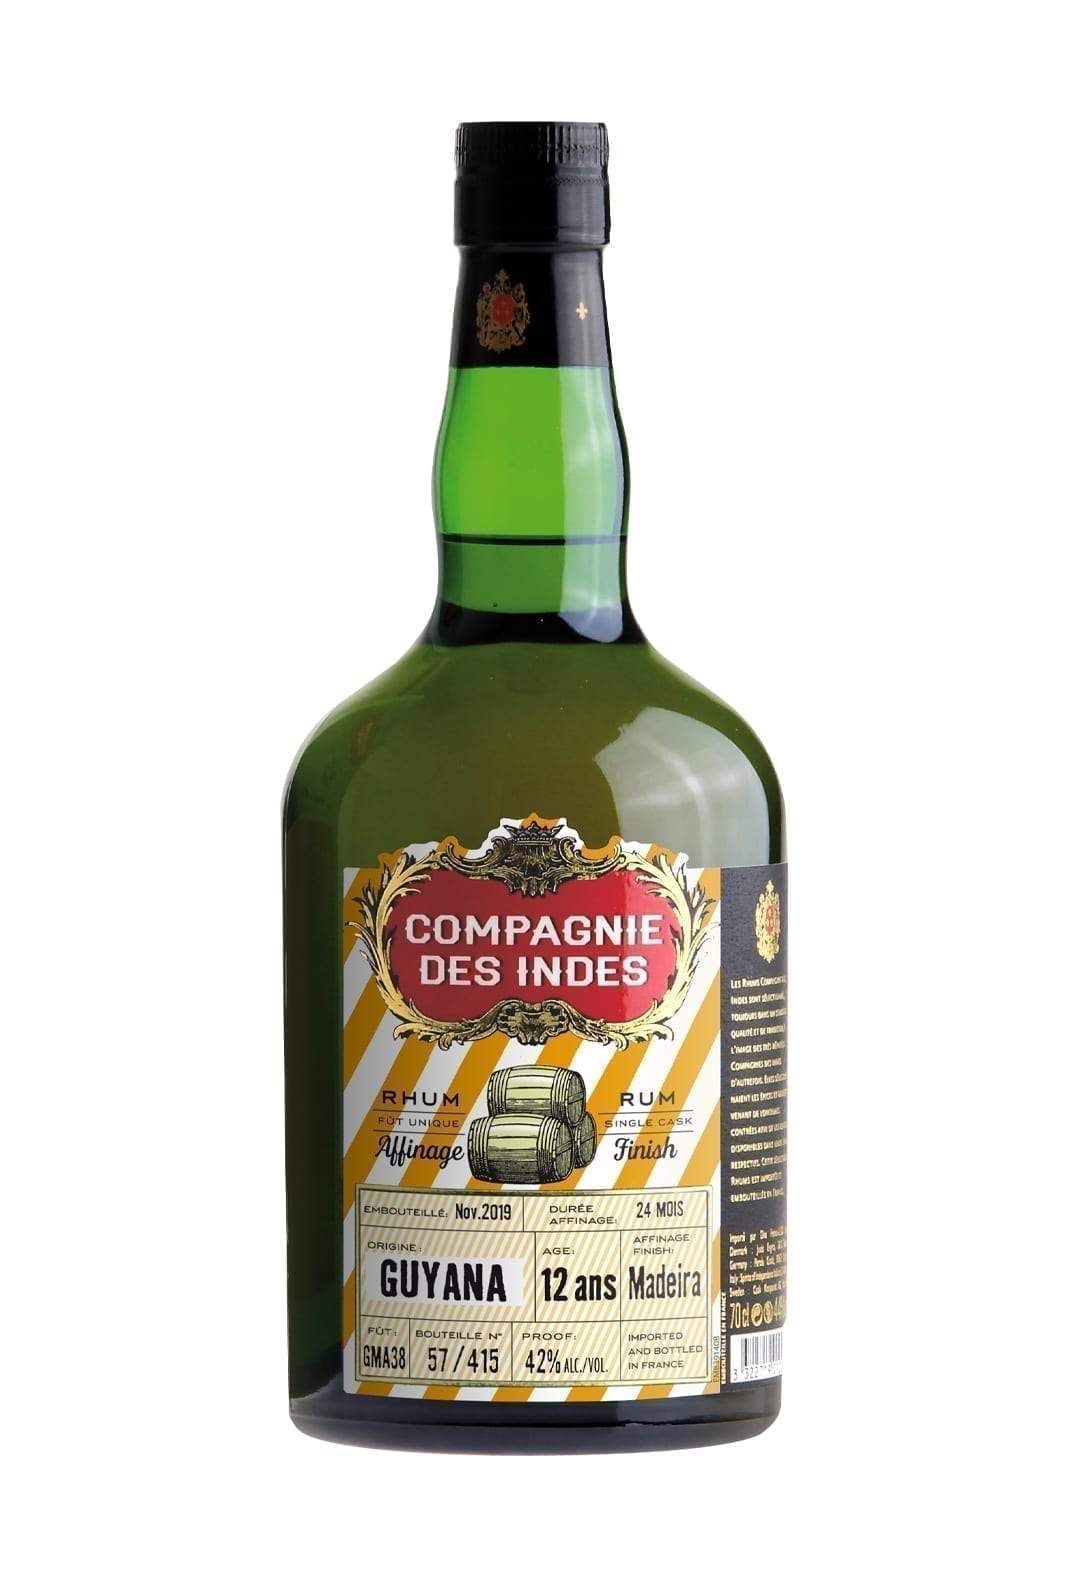 Compagnie des Indes Rum Guyana 12 years 42% 700ml | Rum | Shop online at Spirits of France